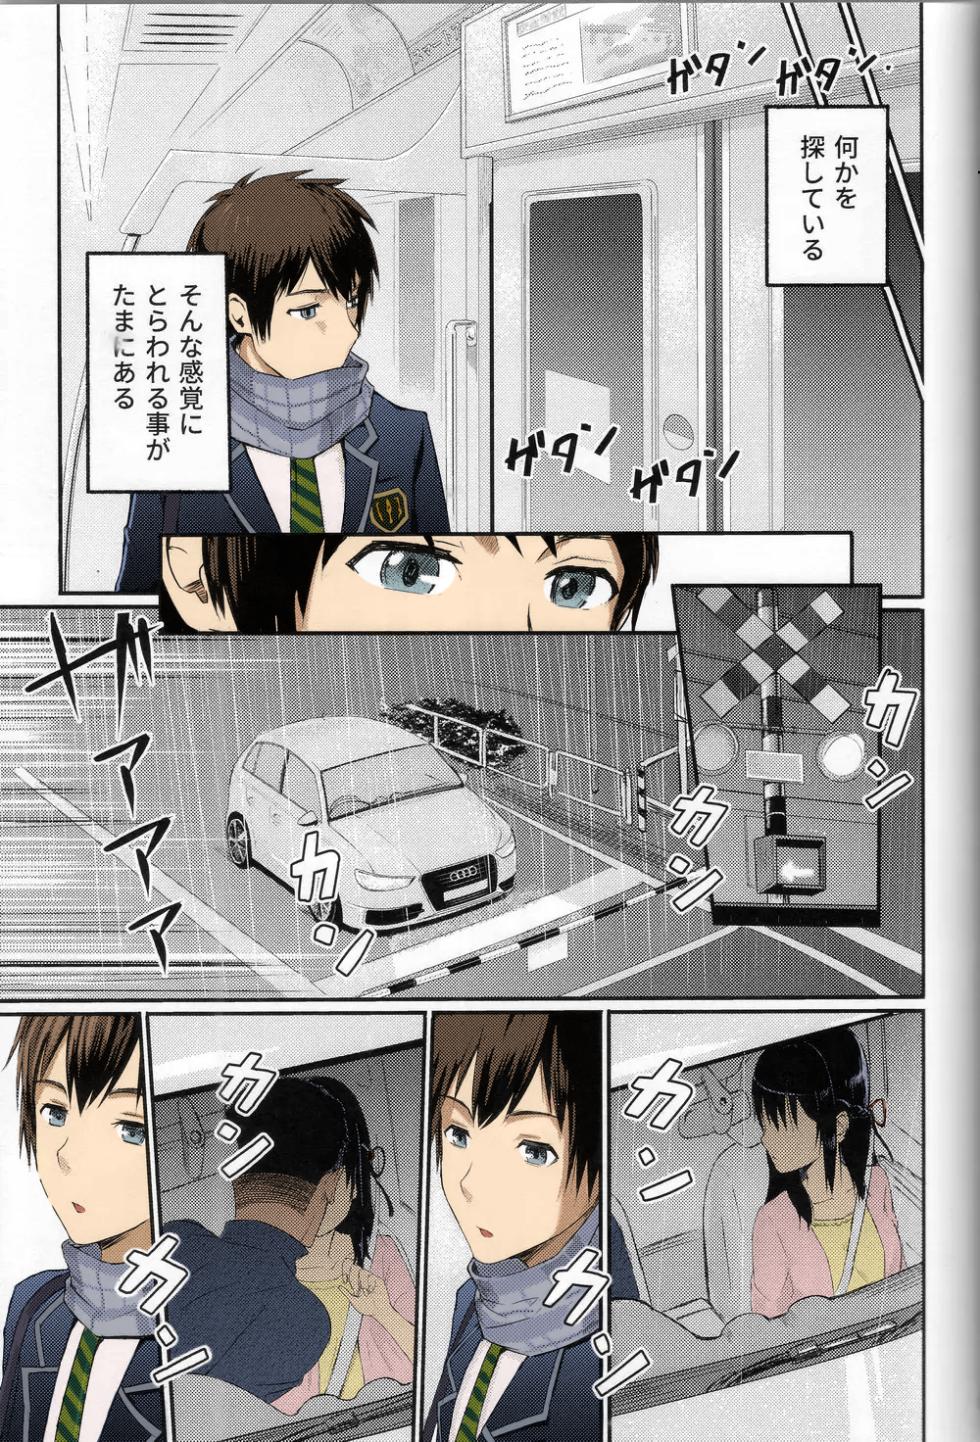 (SC2017 Winter) [Syukurin] Mitsuha ~Netorare~ (Kimi no na wa : After Story) Colorized] (Colorized by mikakucoloring) - Page 3